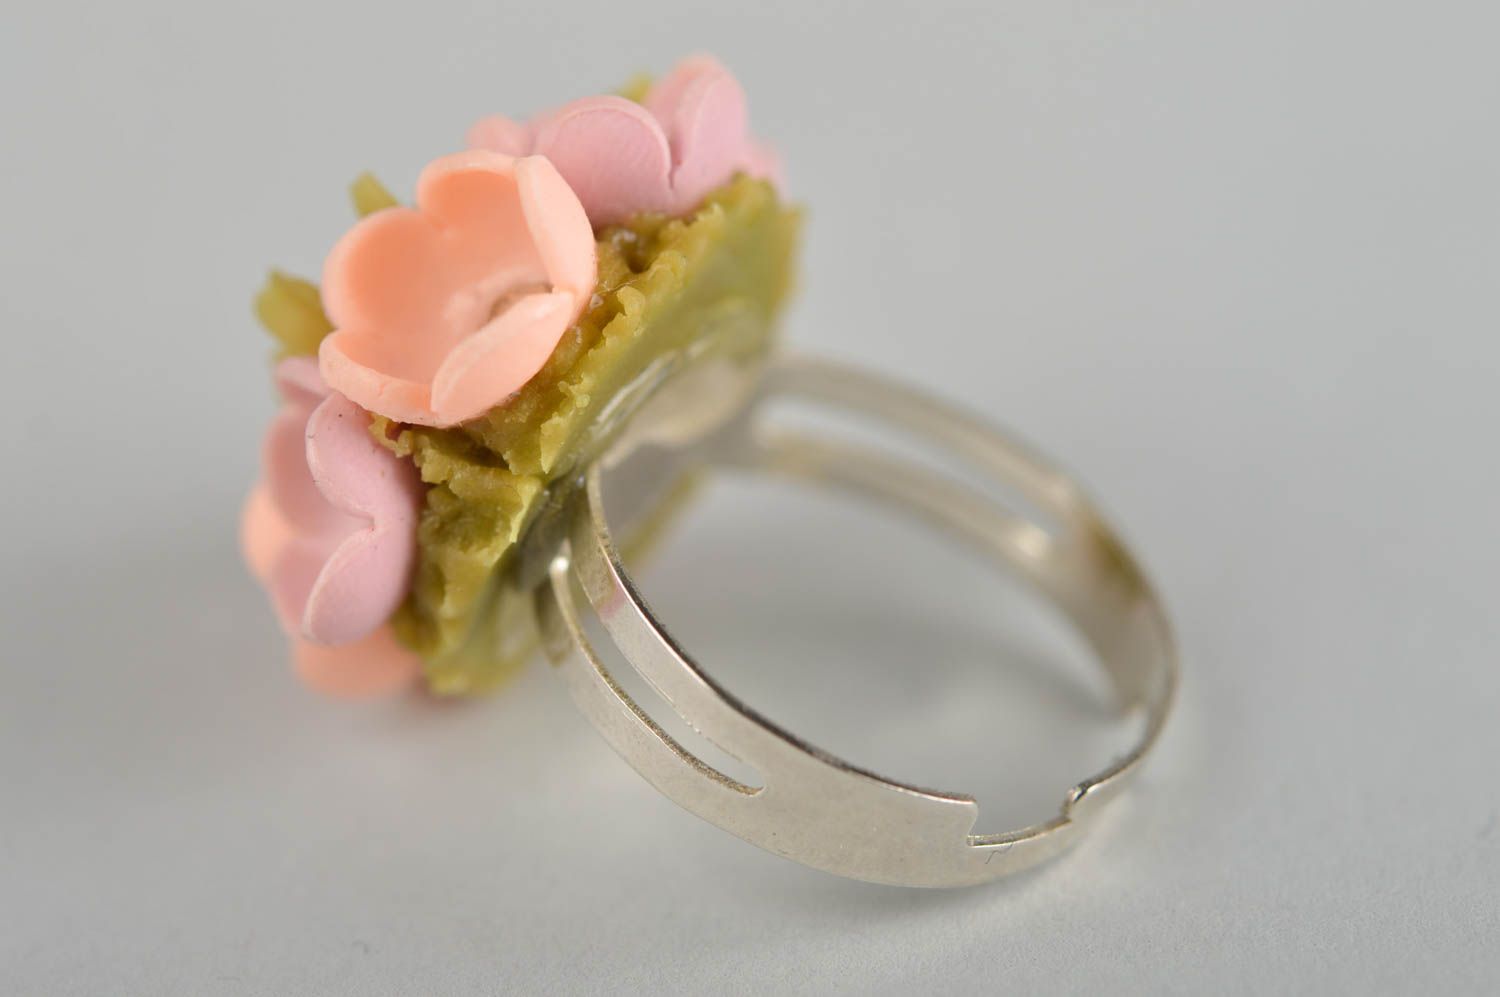 Gentle handmade flower ring artisan jewelry designs handmade gifts for her photo 5